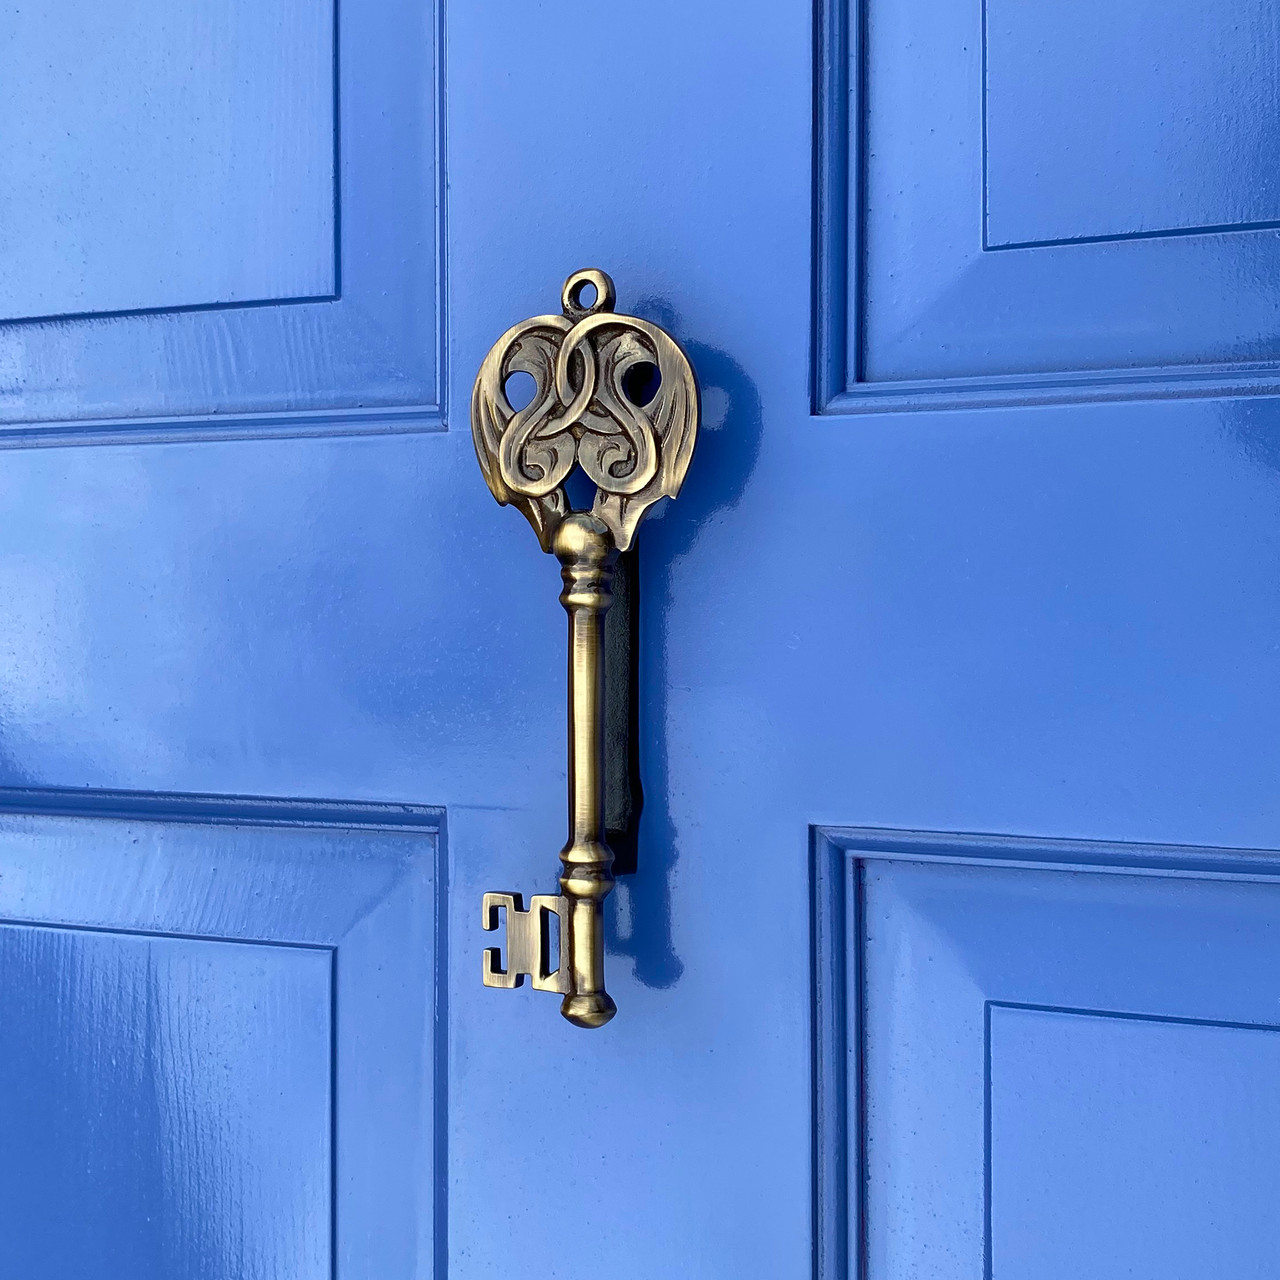 https://cdn11.bigcommerce.com/s-nhdatqwfzf/images/stencil/1280x1280/products/391/1121/key-door-knocker-antique-brass-purple-door__37475.1650648515.jpg?c=1?imbypass=on